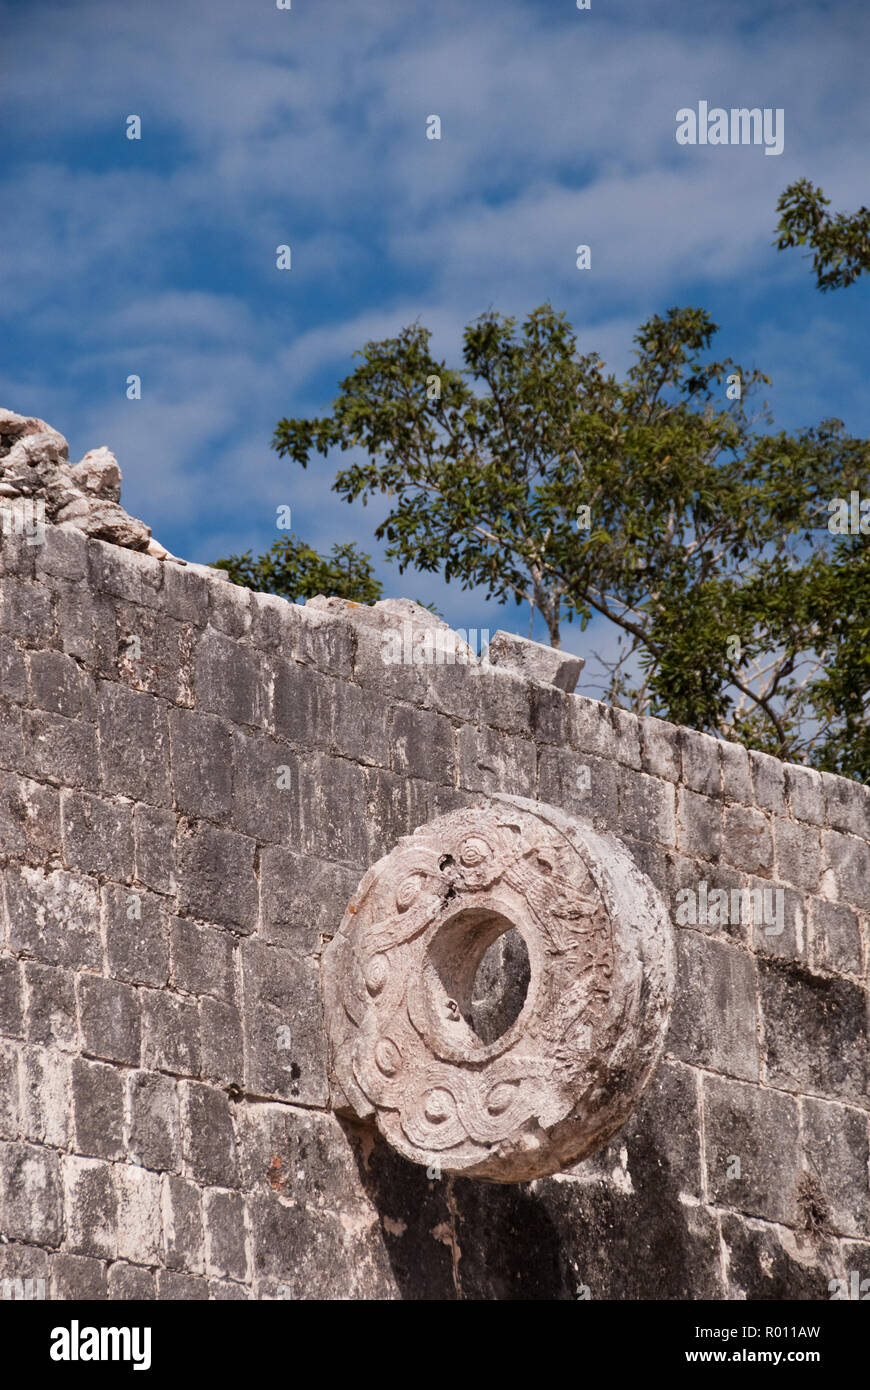 Un anneau de pierre au Grand Ball (Gran Juego de pelote basque), l'habitude  de jouer un jeu de balle mésoaméricain, Chichen Itza, Yucatan, Mexique  Photo Stock - Alamy